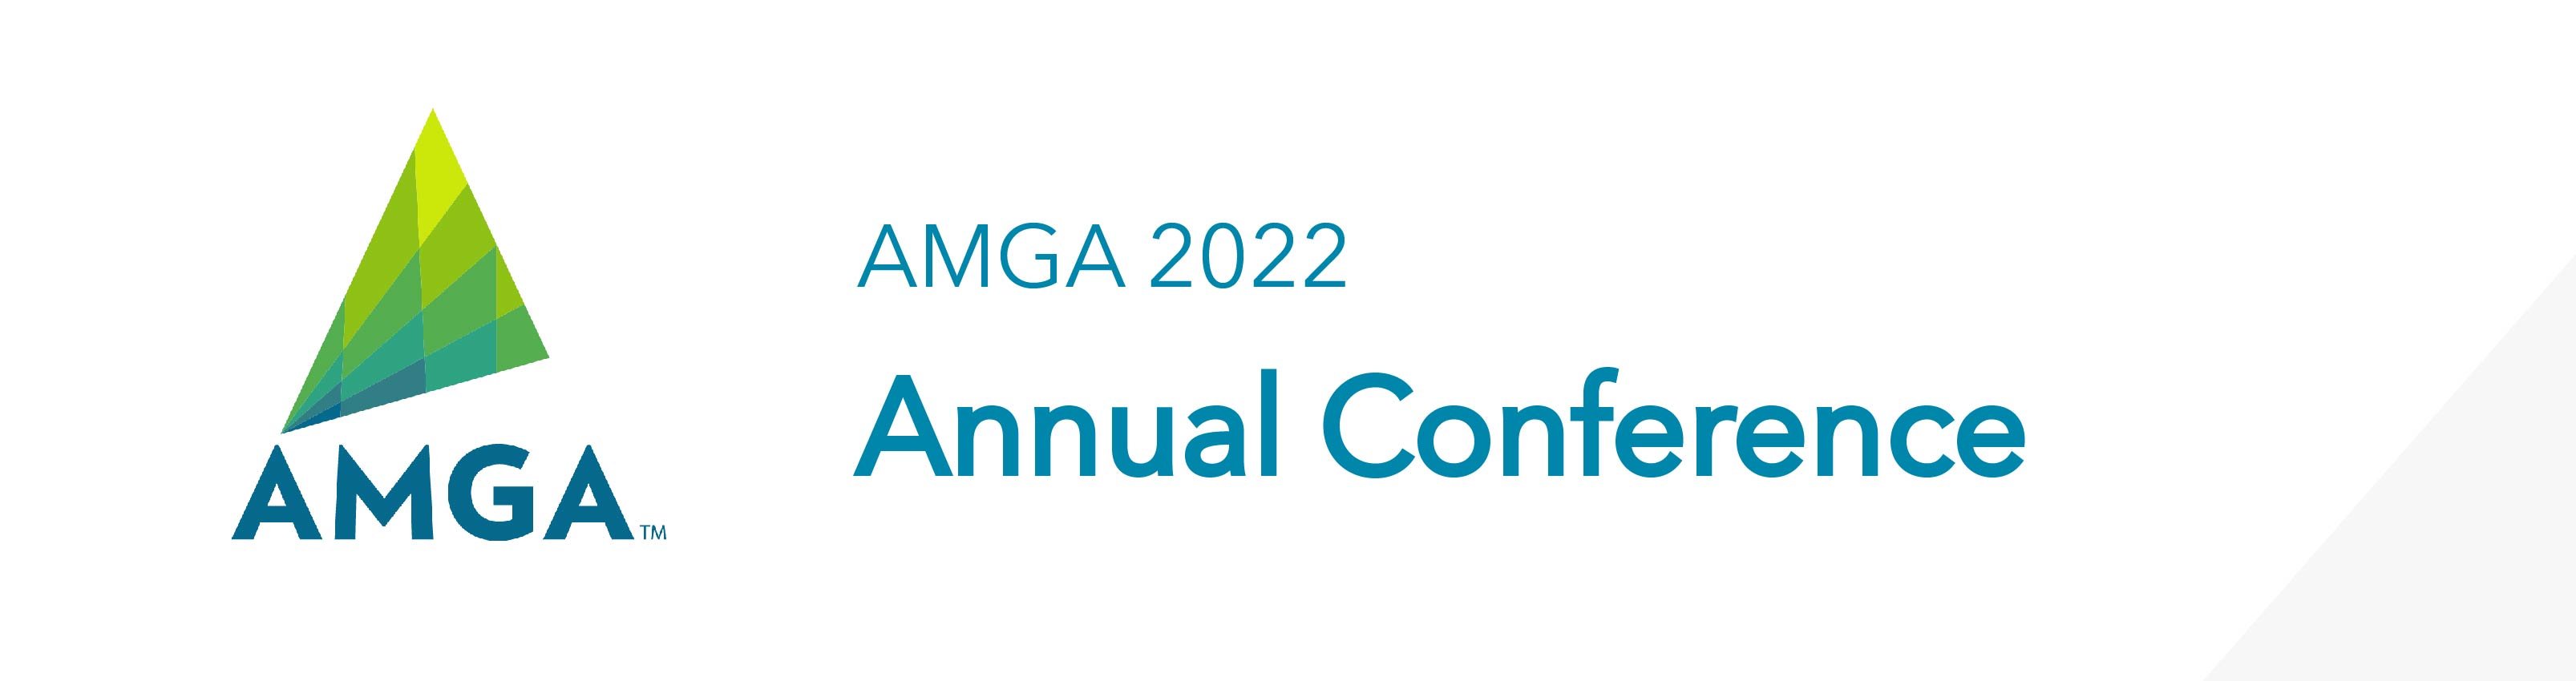 AMGA 2022 Conference